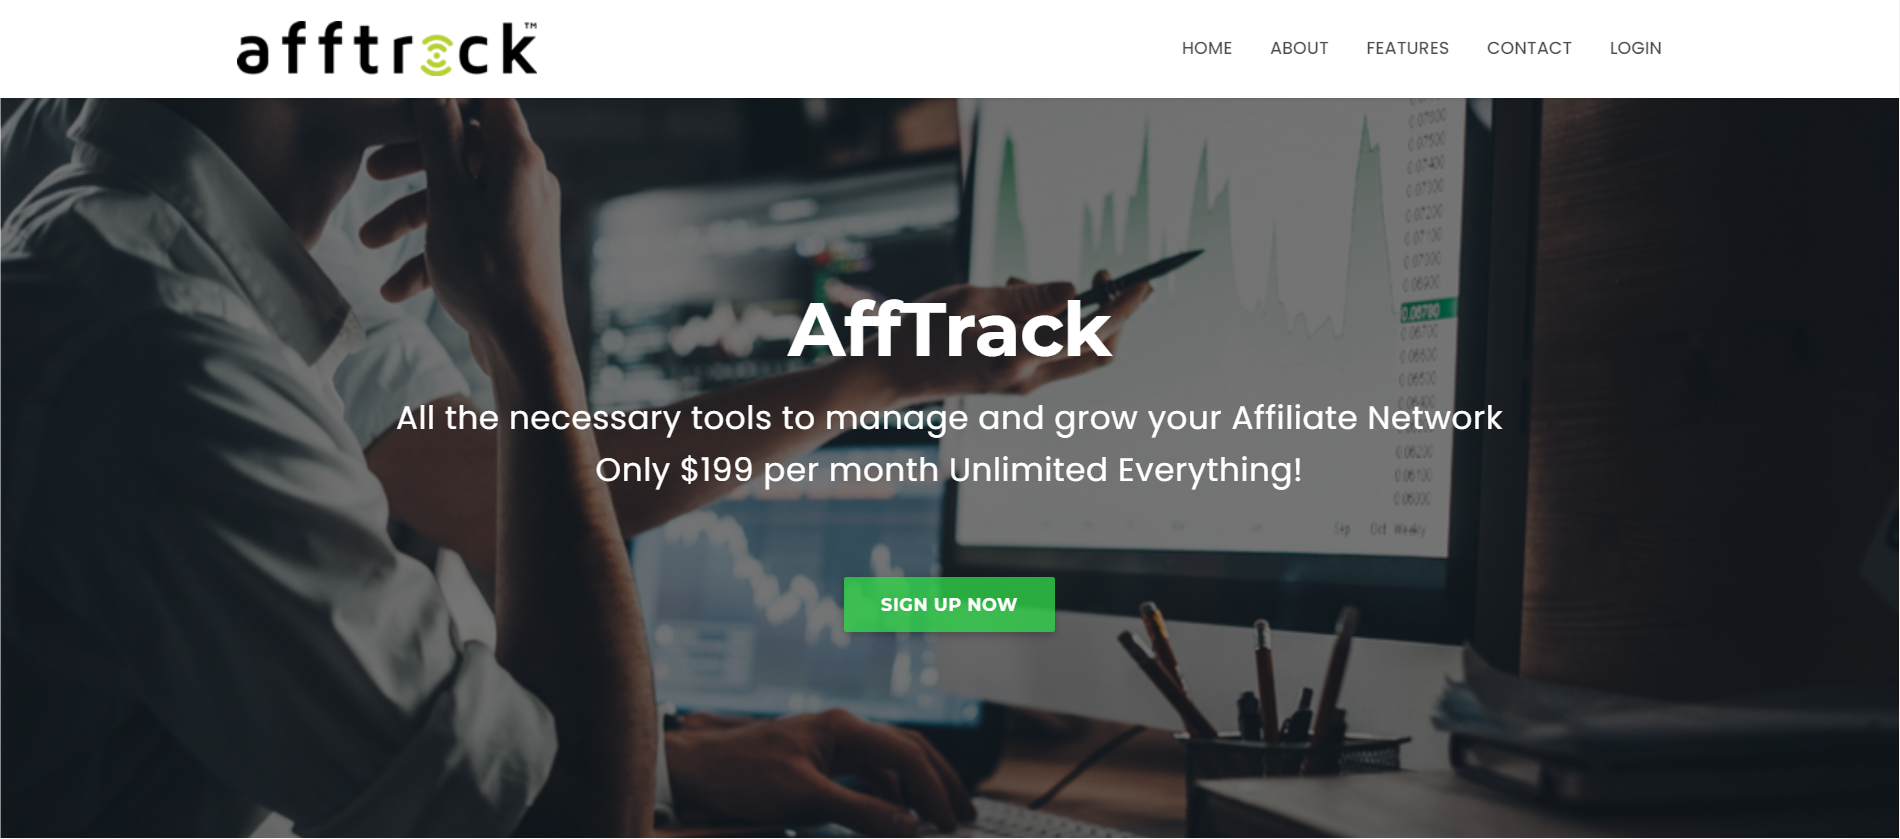 AffTrack-Overview